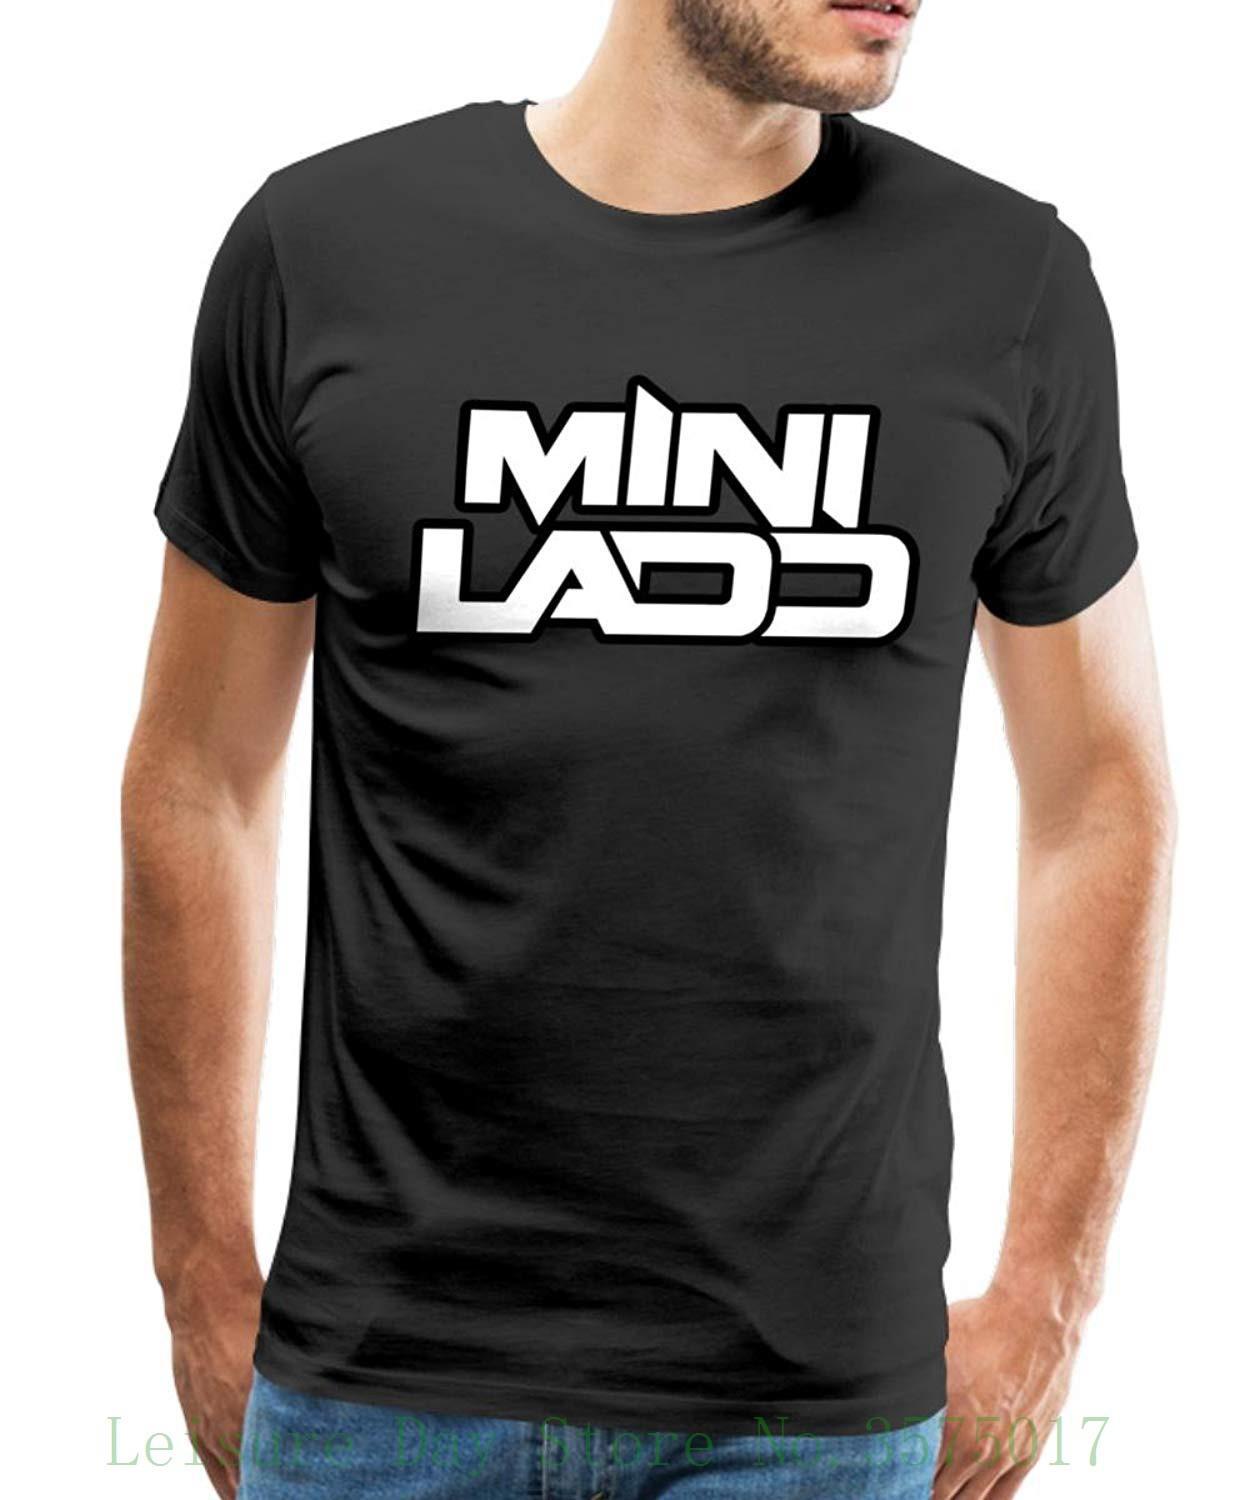 Ladd Logo - Mini Ladd Logo Men'S T Shirt Summer Short Sleeve Shirts Tops S 3xl